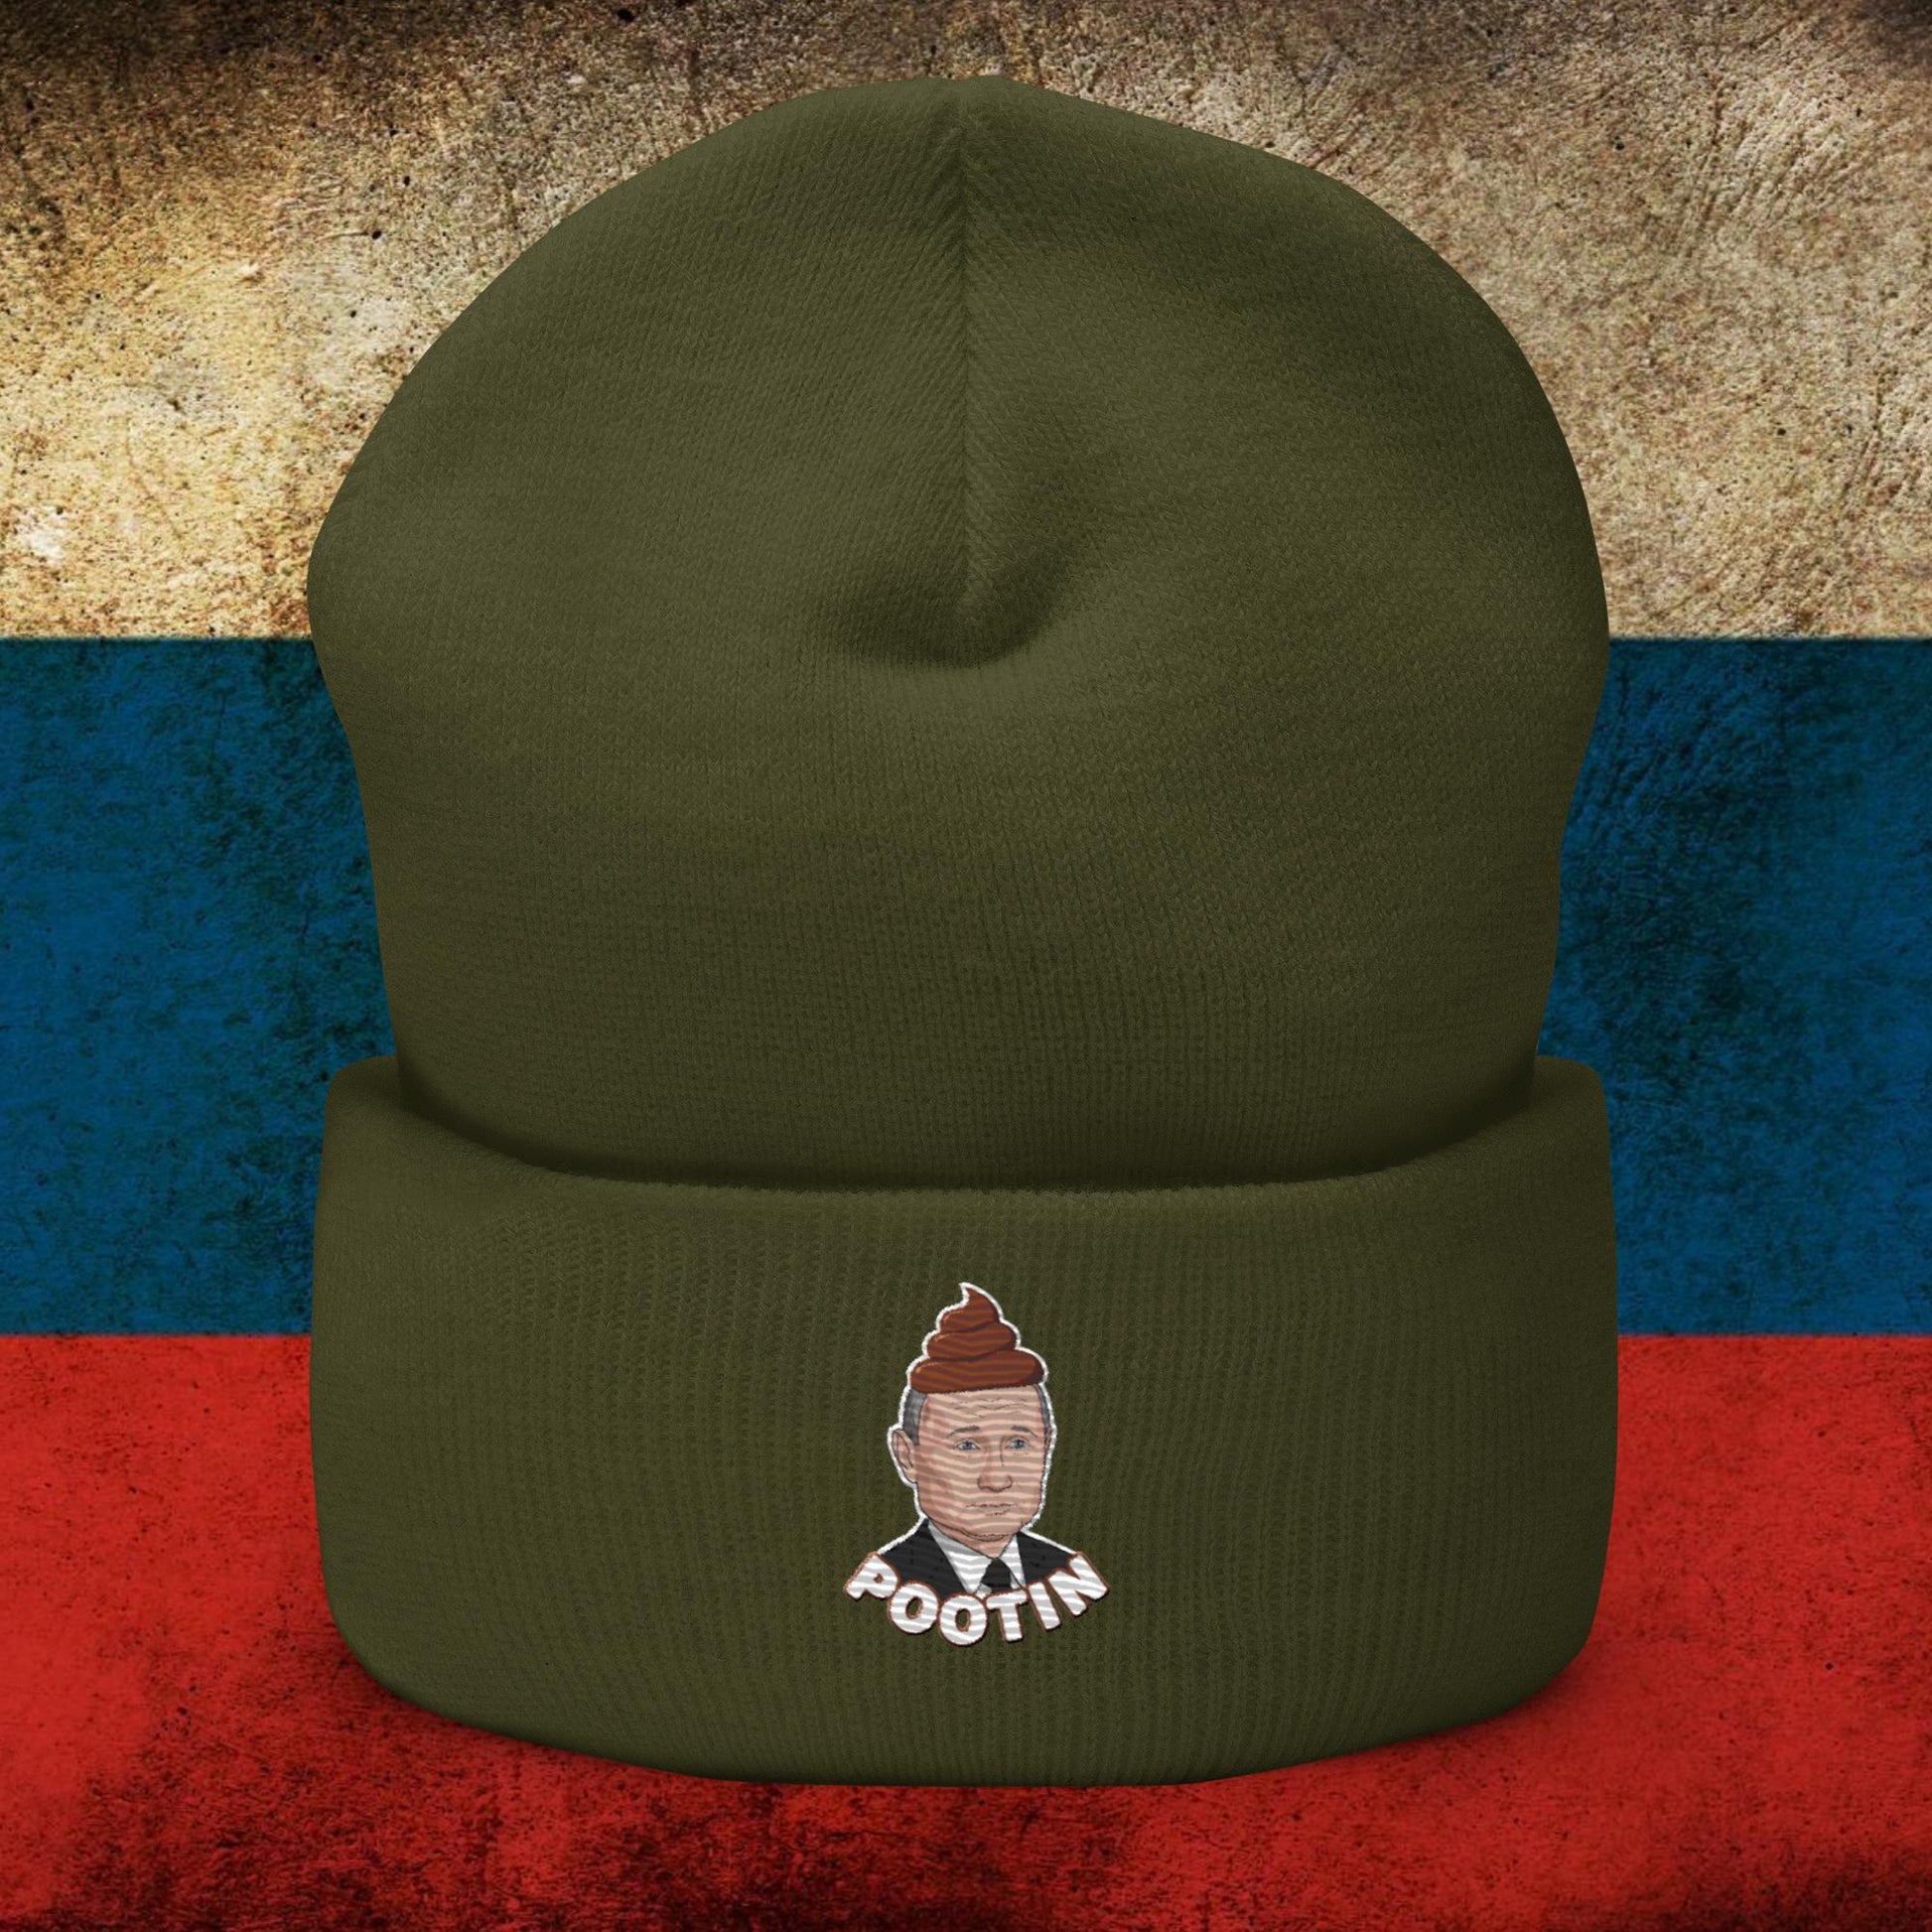 Pootin Funny Anti Vladimir Putin Cuffed Beanie Next Cult Brand